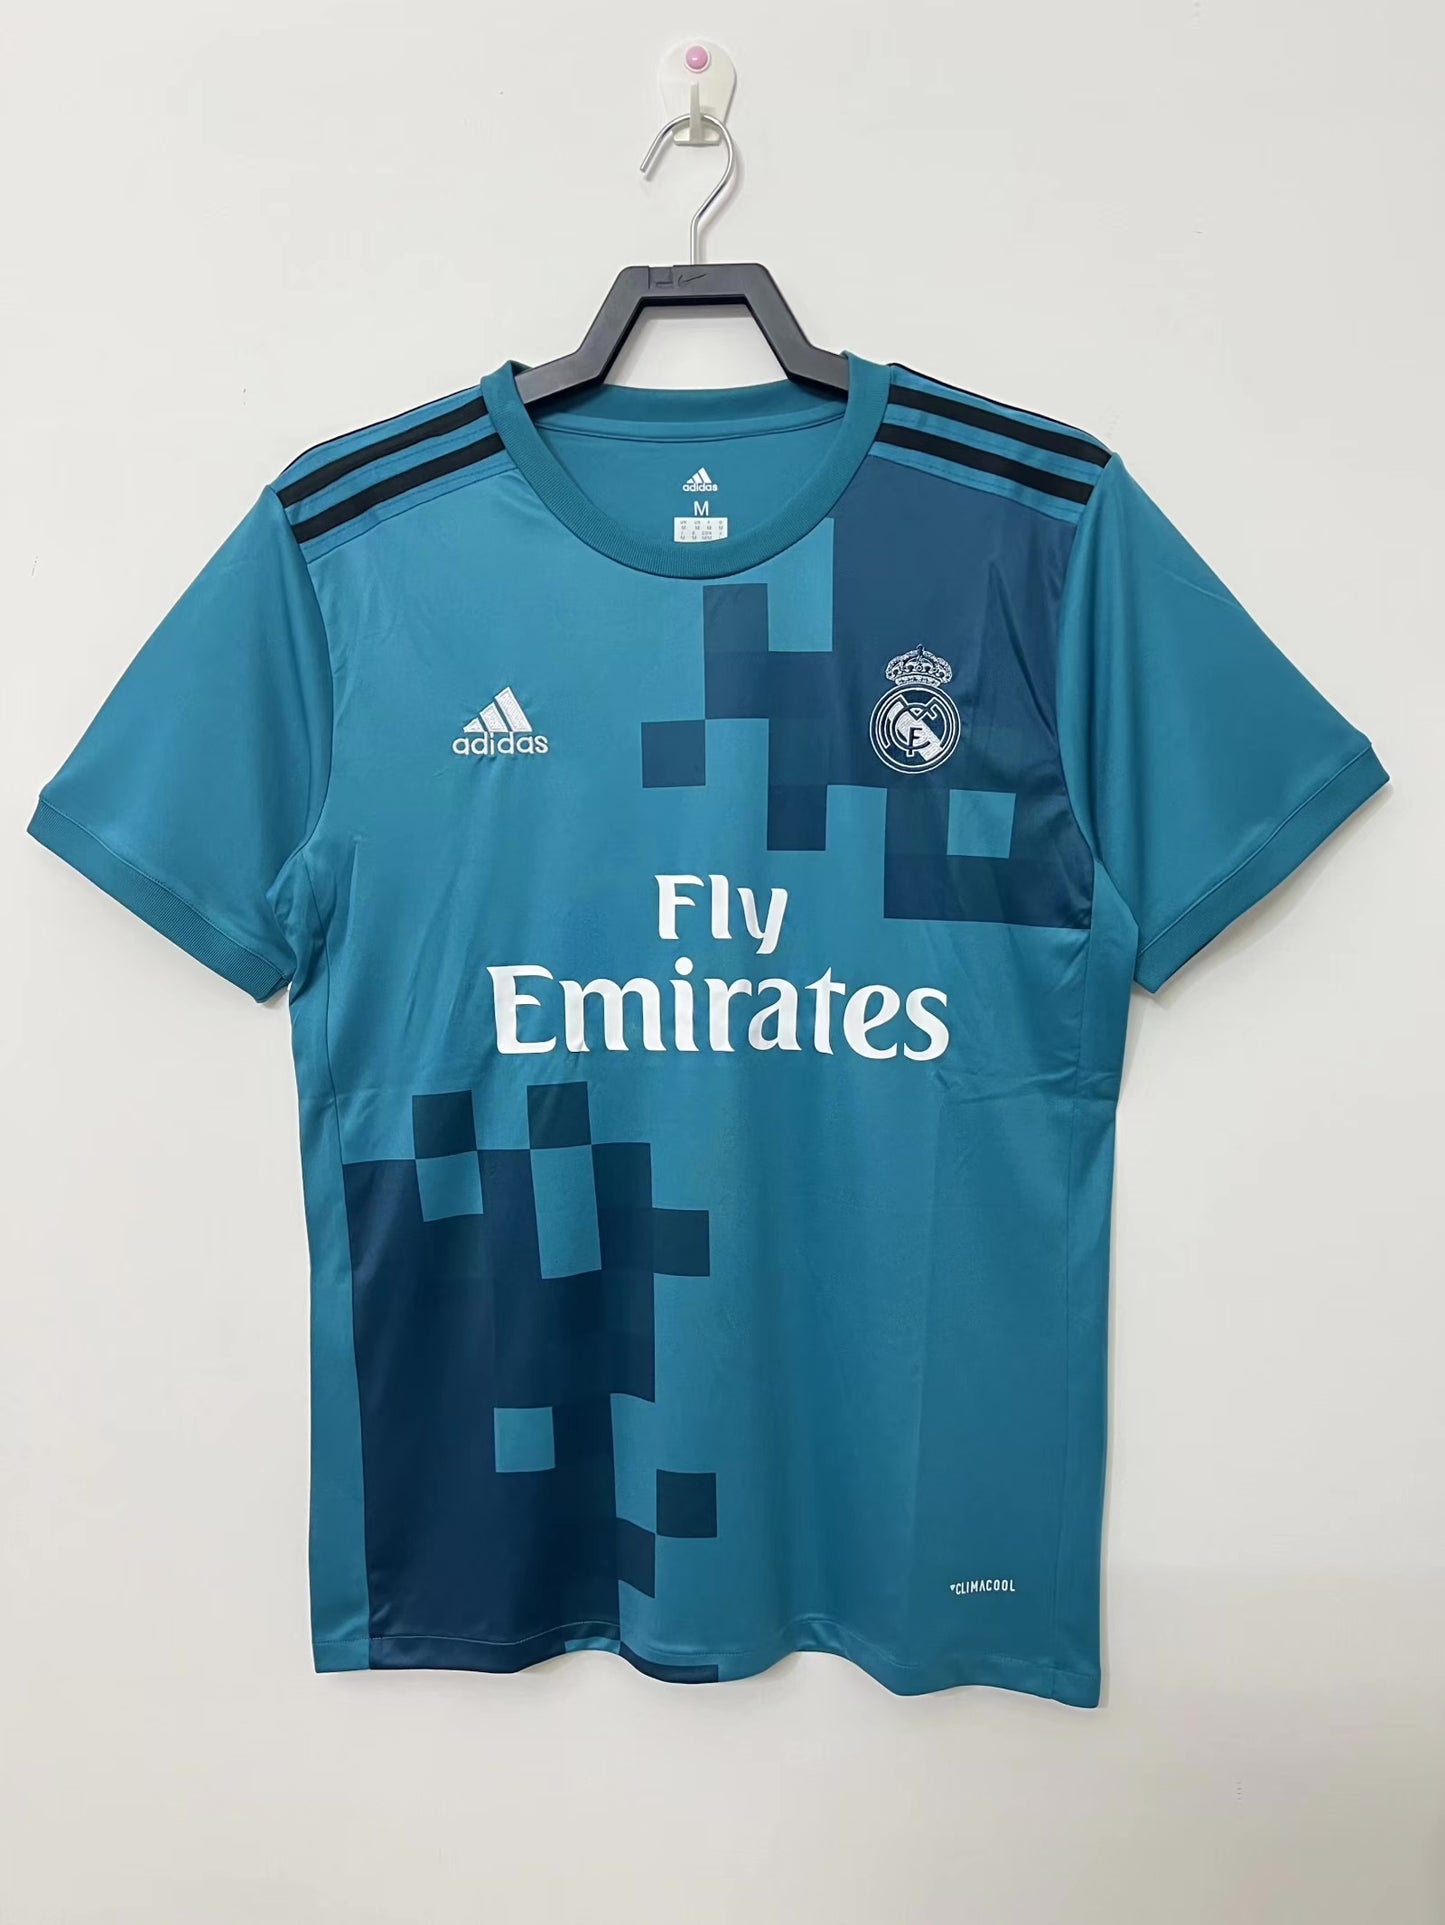 Real Madrid 17/18 UCL Retro Home Shirt Jersey- Ronaldo 7 Printing Available